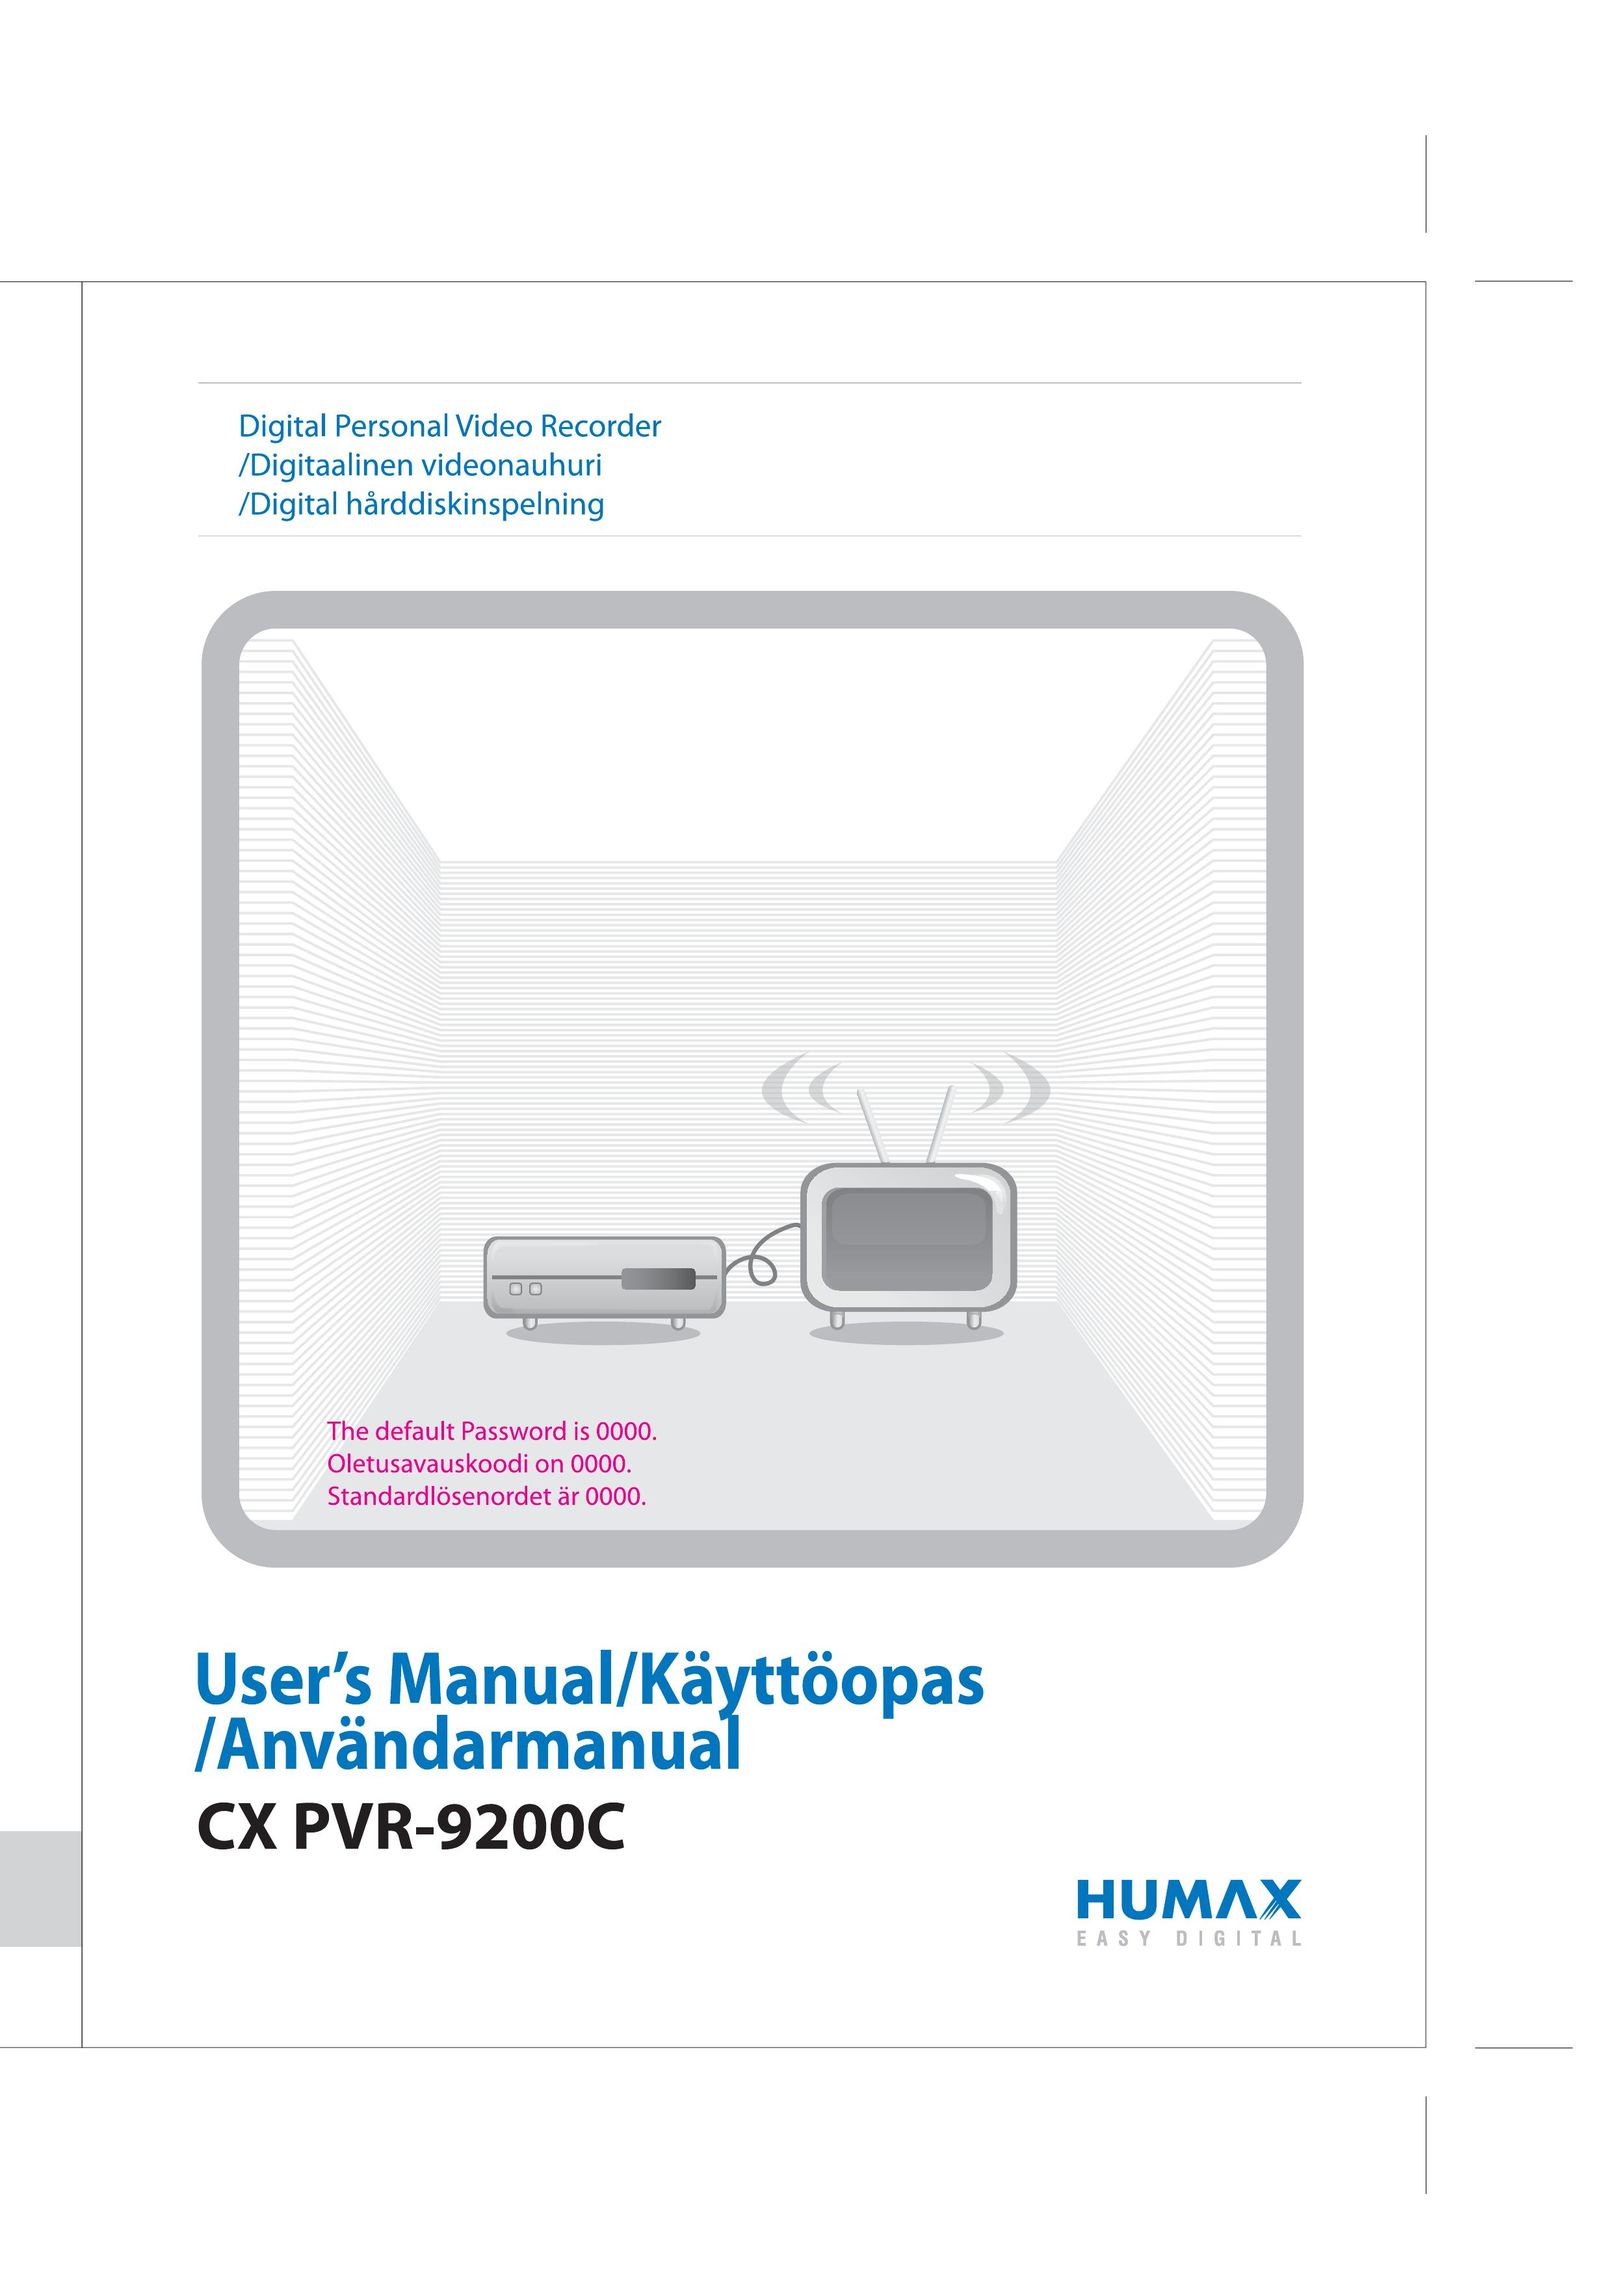 Humax CX PVR-9200C DVR User Manual